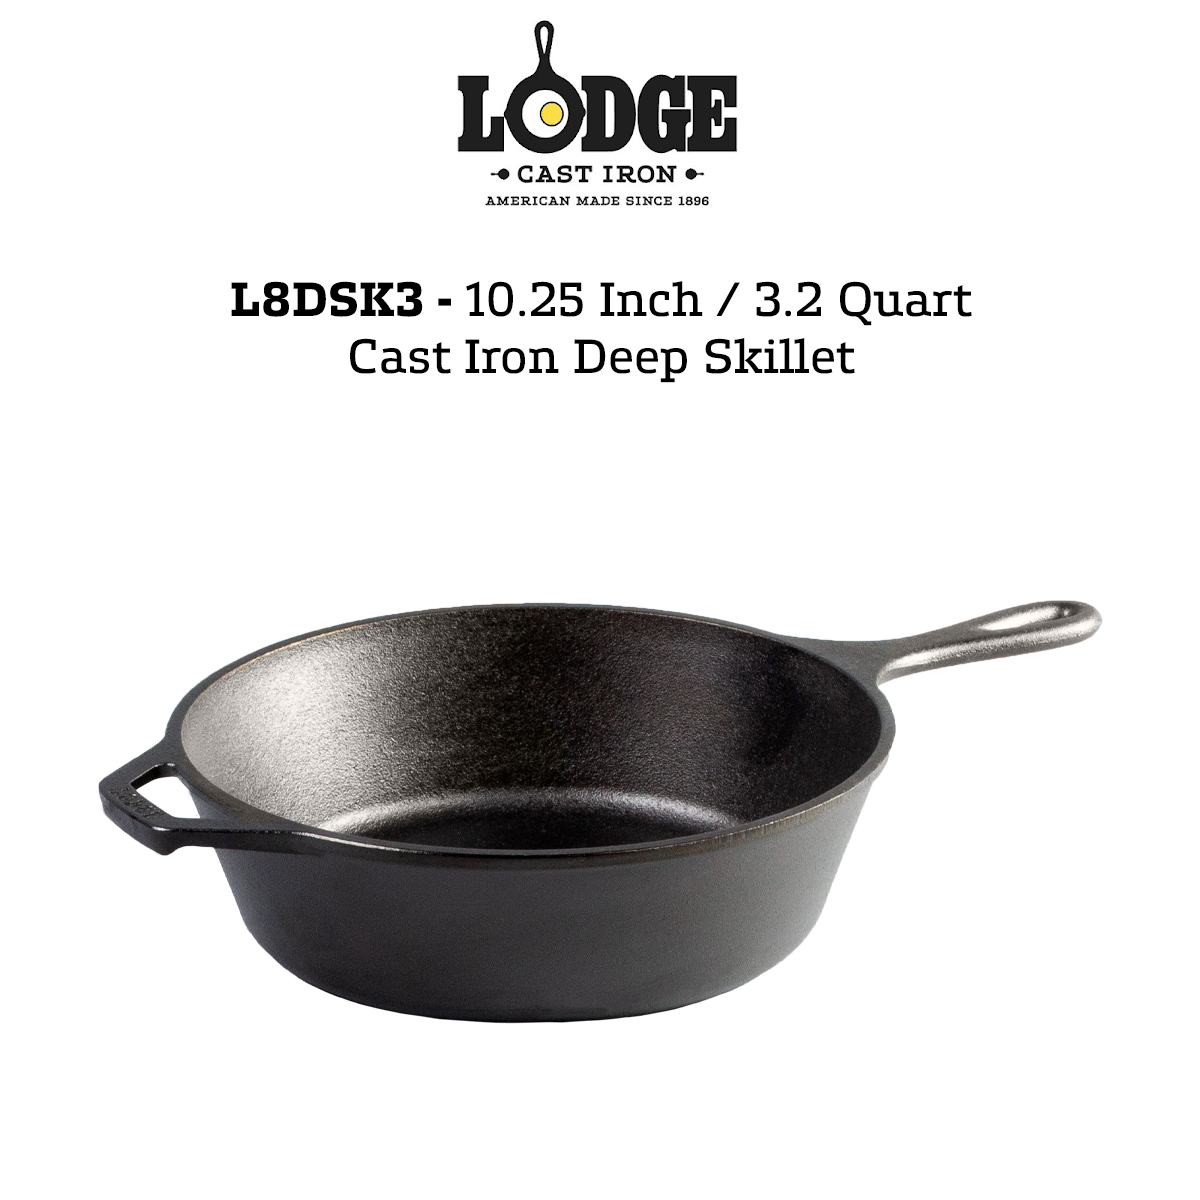 Lodge L8DSK3 Cast Iron Deep Skillet, Pre-Seasoned, 10.25-Inch